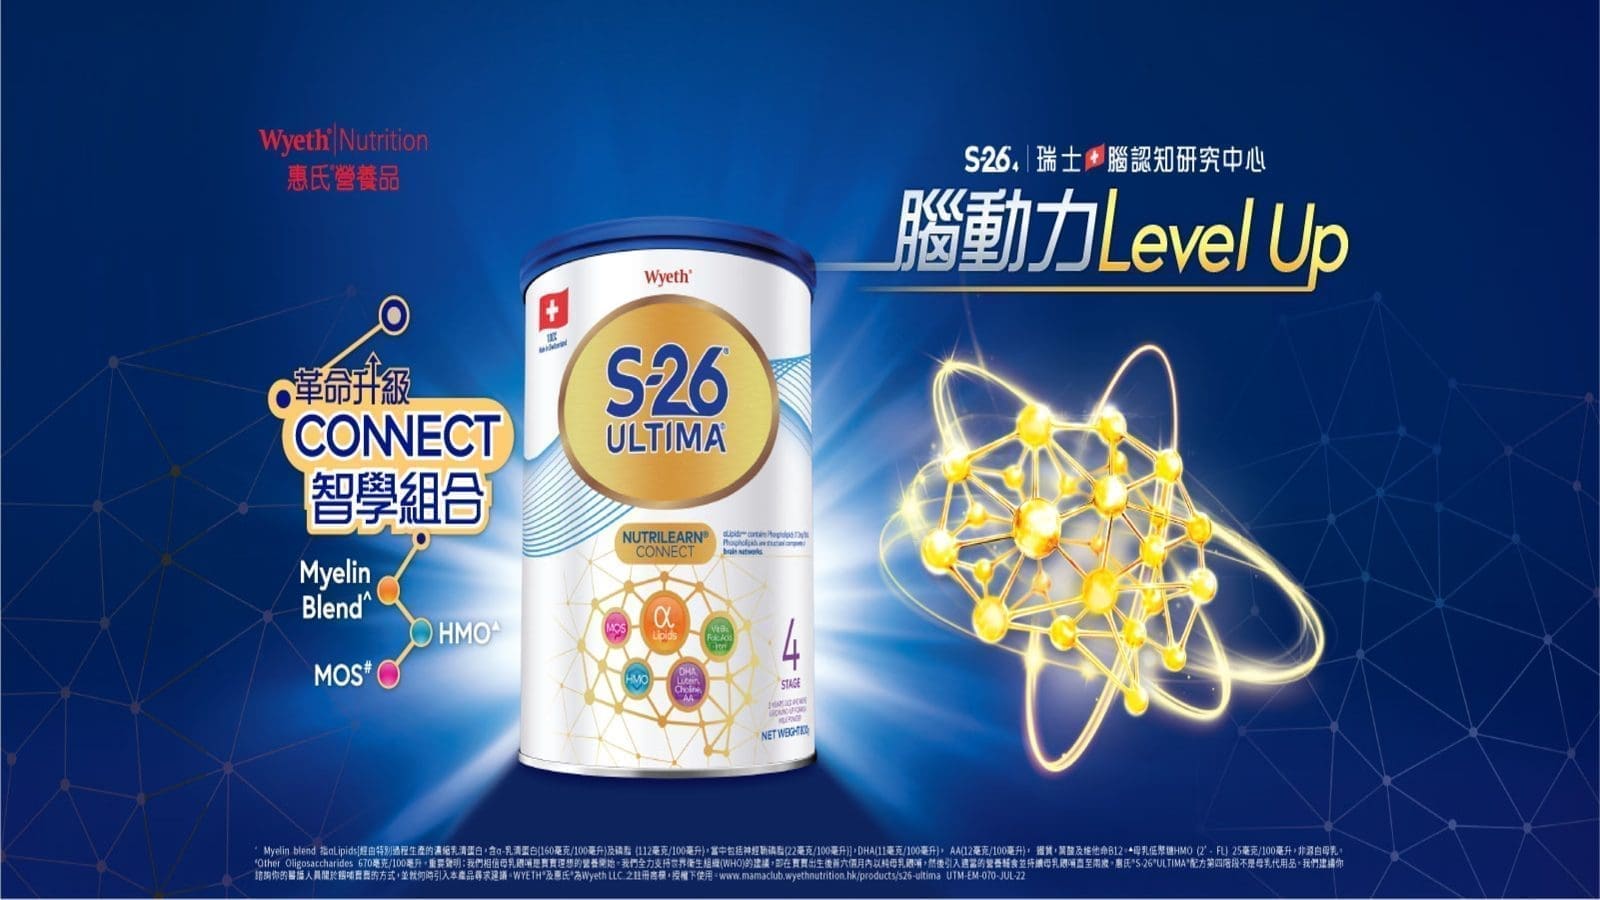 Nestlé starts commercial marketing of novel infant formula in China under WYETH S-26 Ultima brand